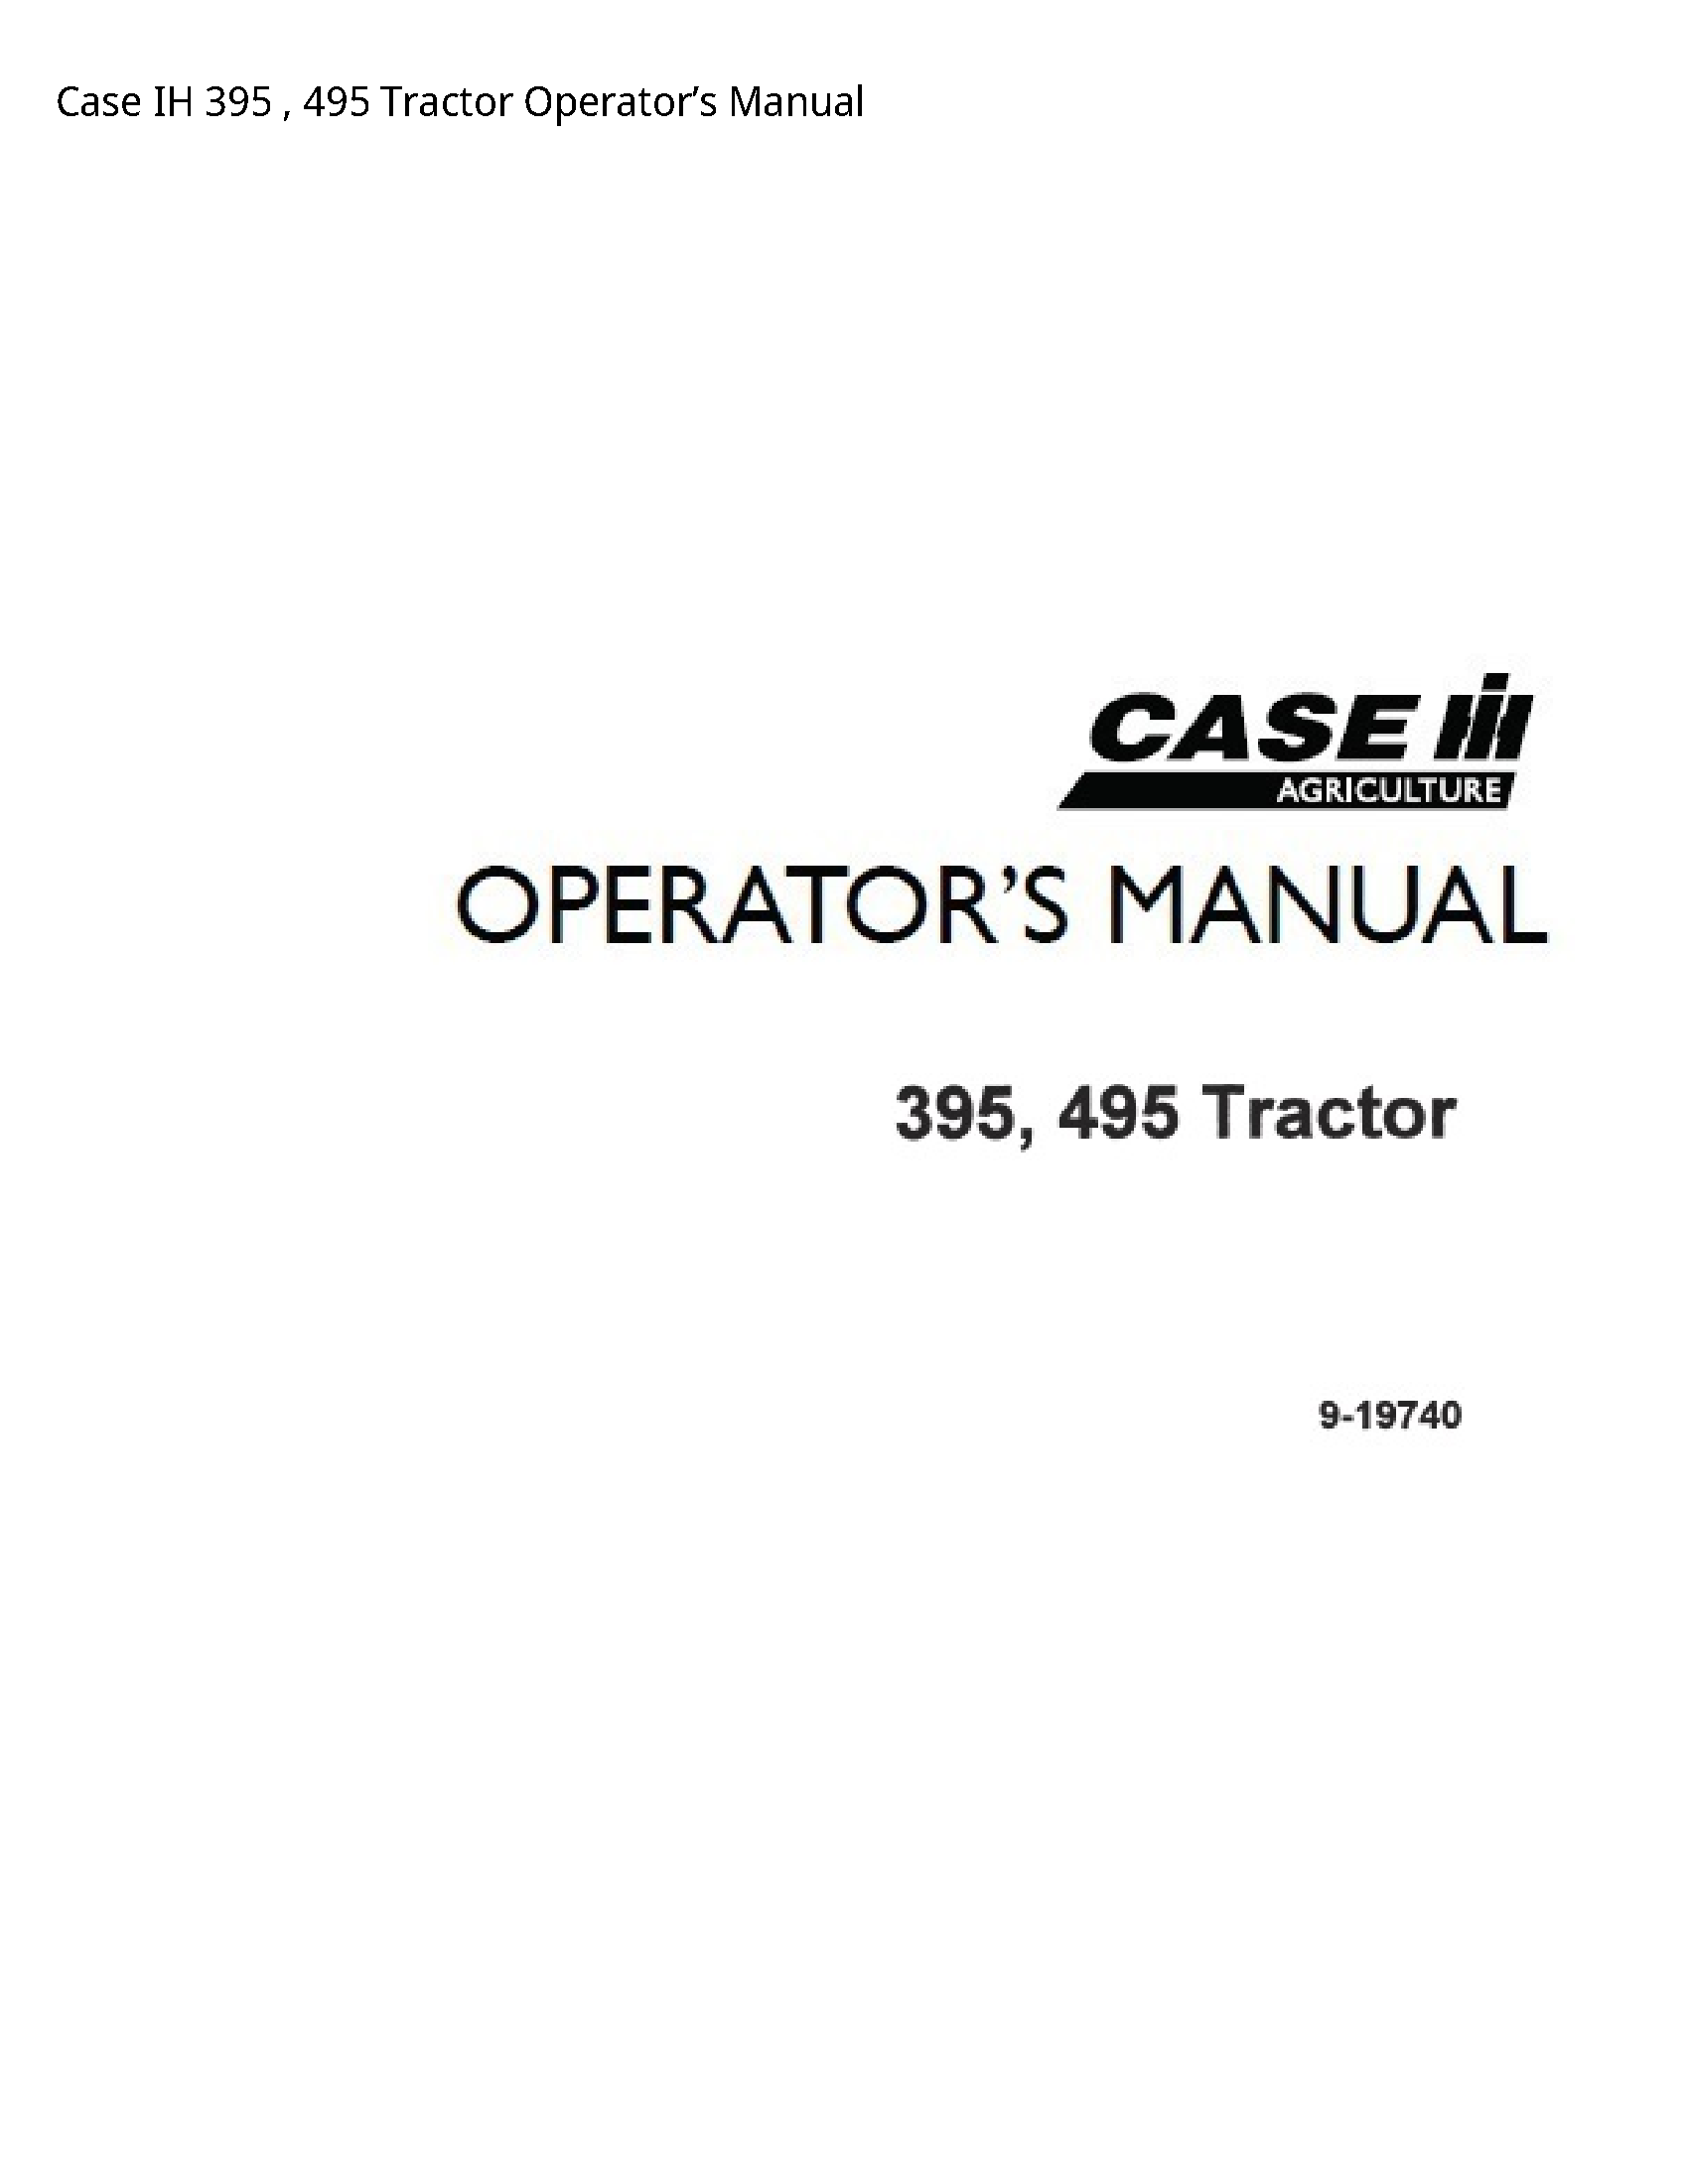 Case/Case IH 395 IH Tractor Operator’s manual